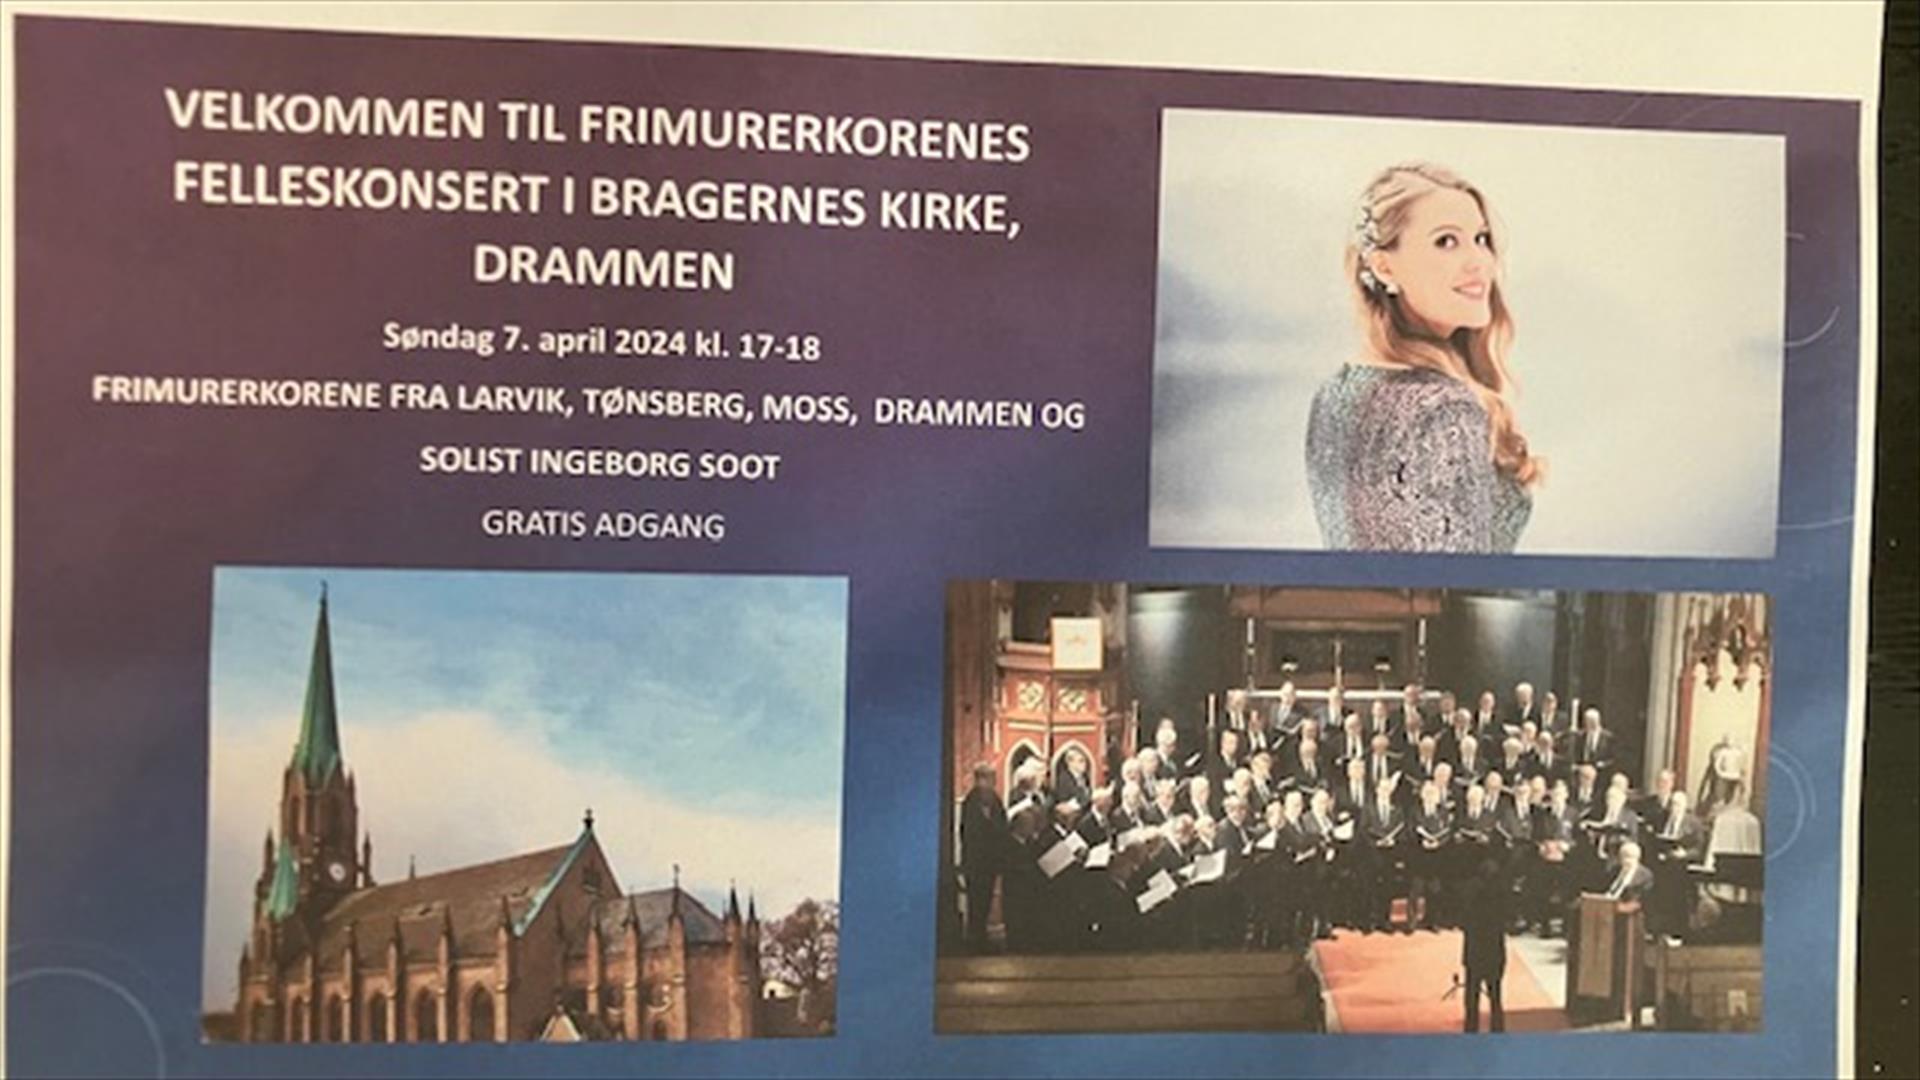 Felleskonserten Bragernes kirke 2018